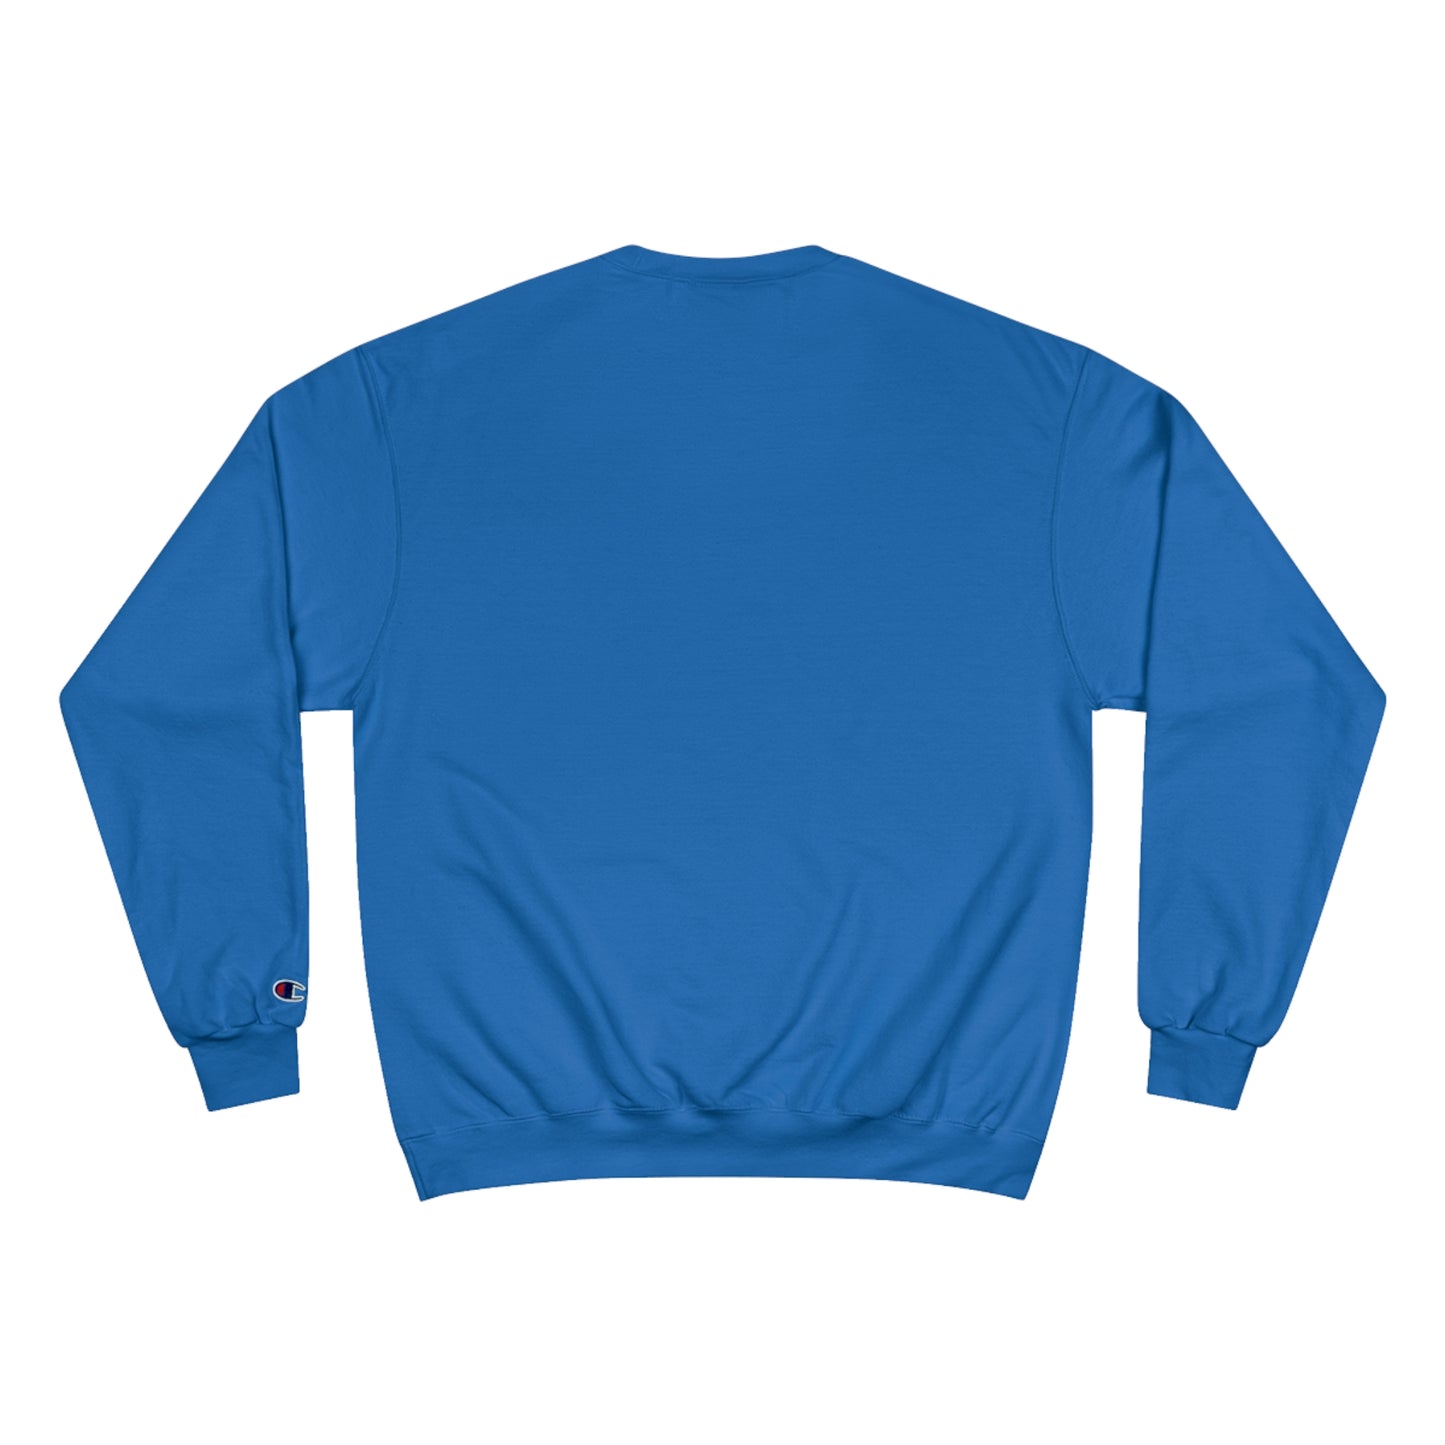 Classic Tech Seal - Champion Crewneck Sweatshirt - Class Of 1964